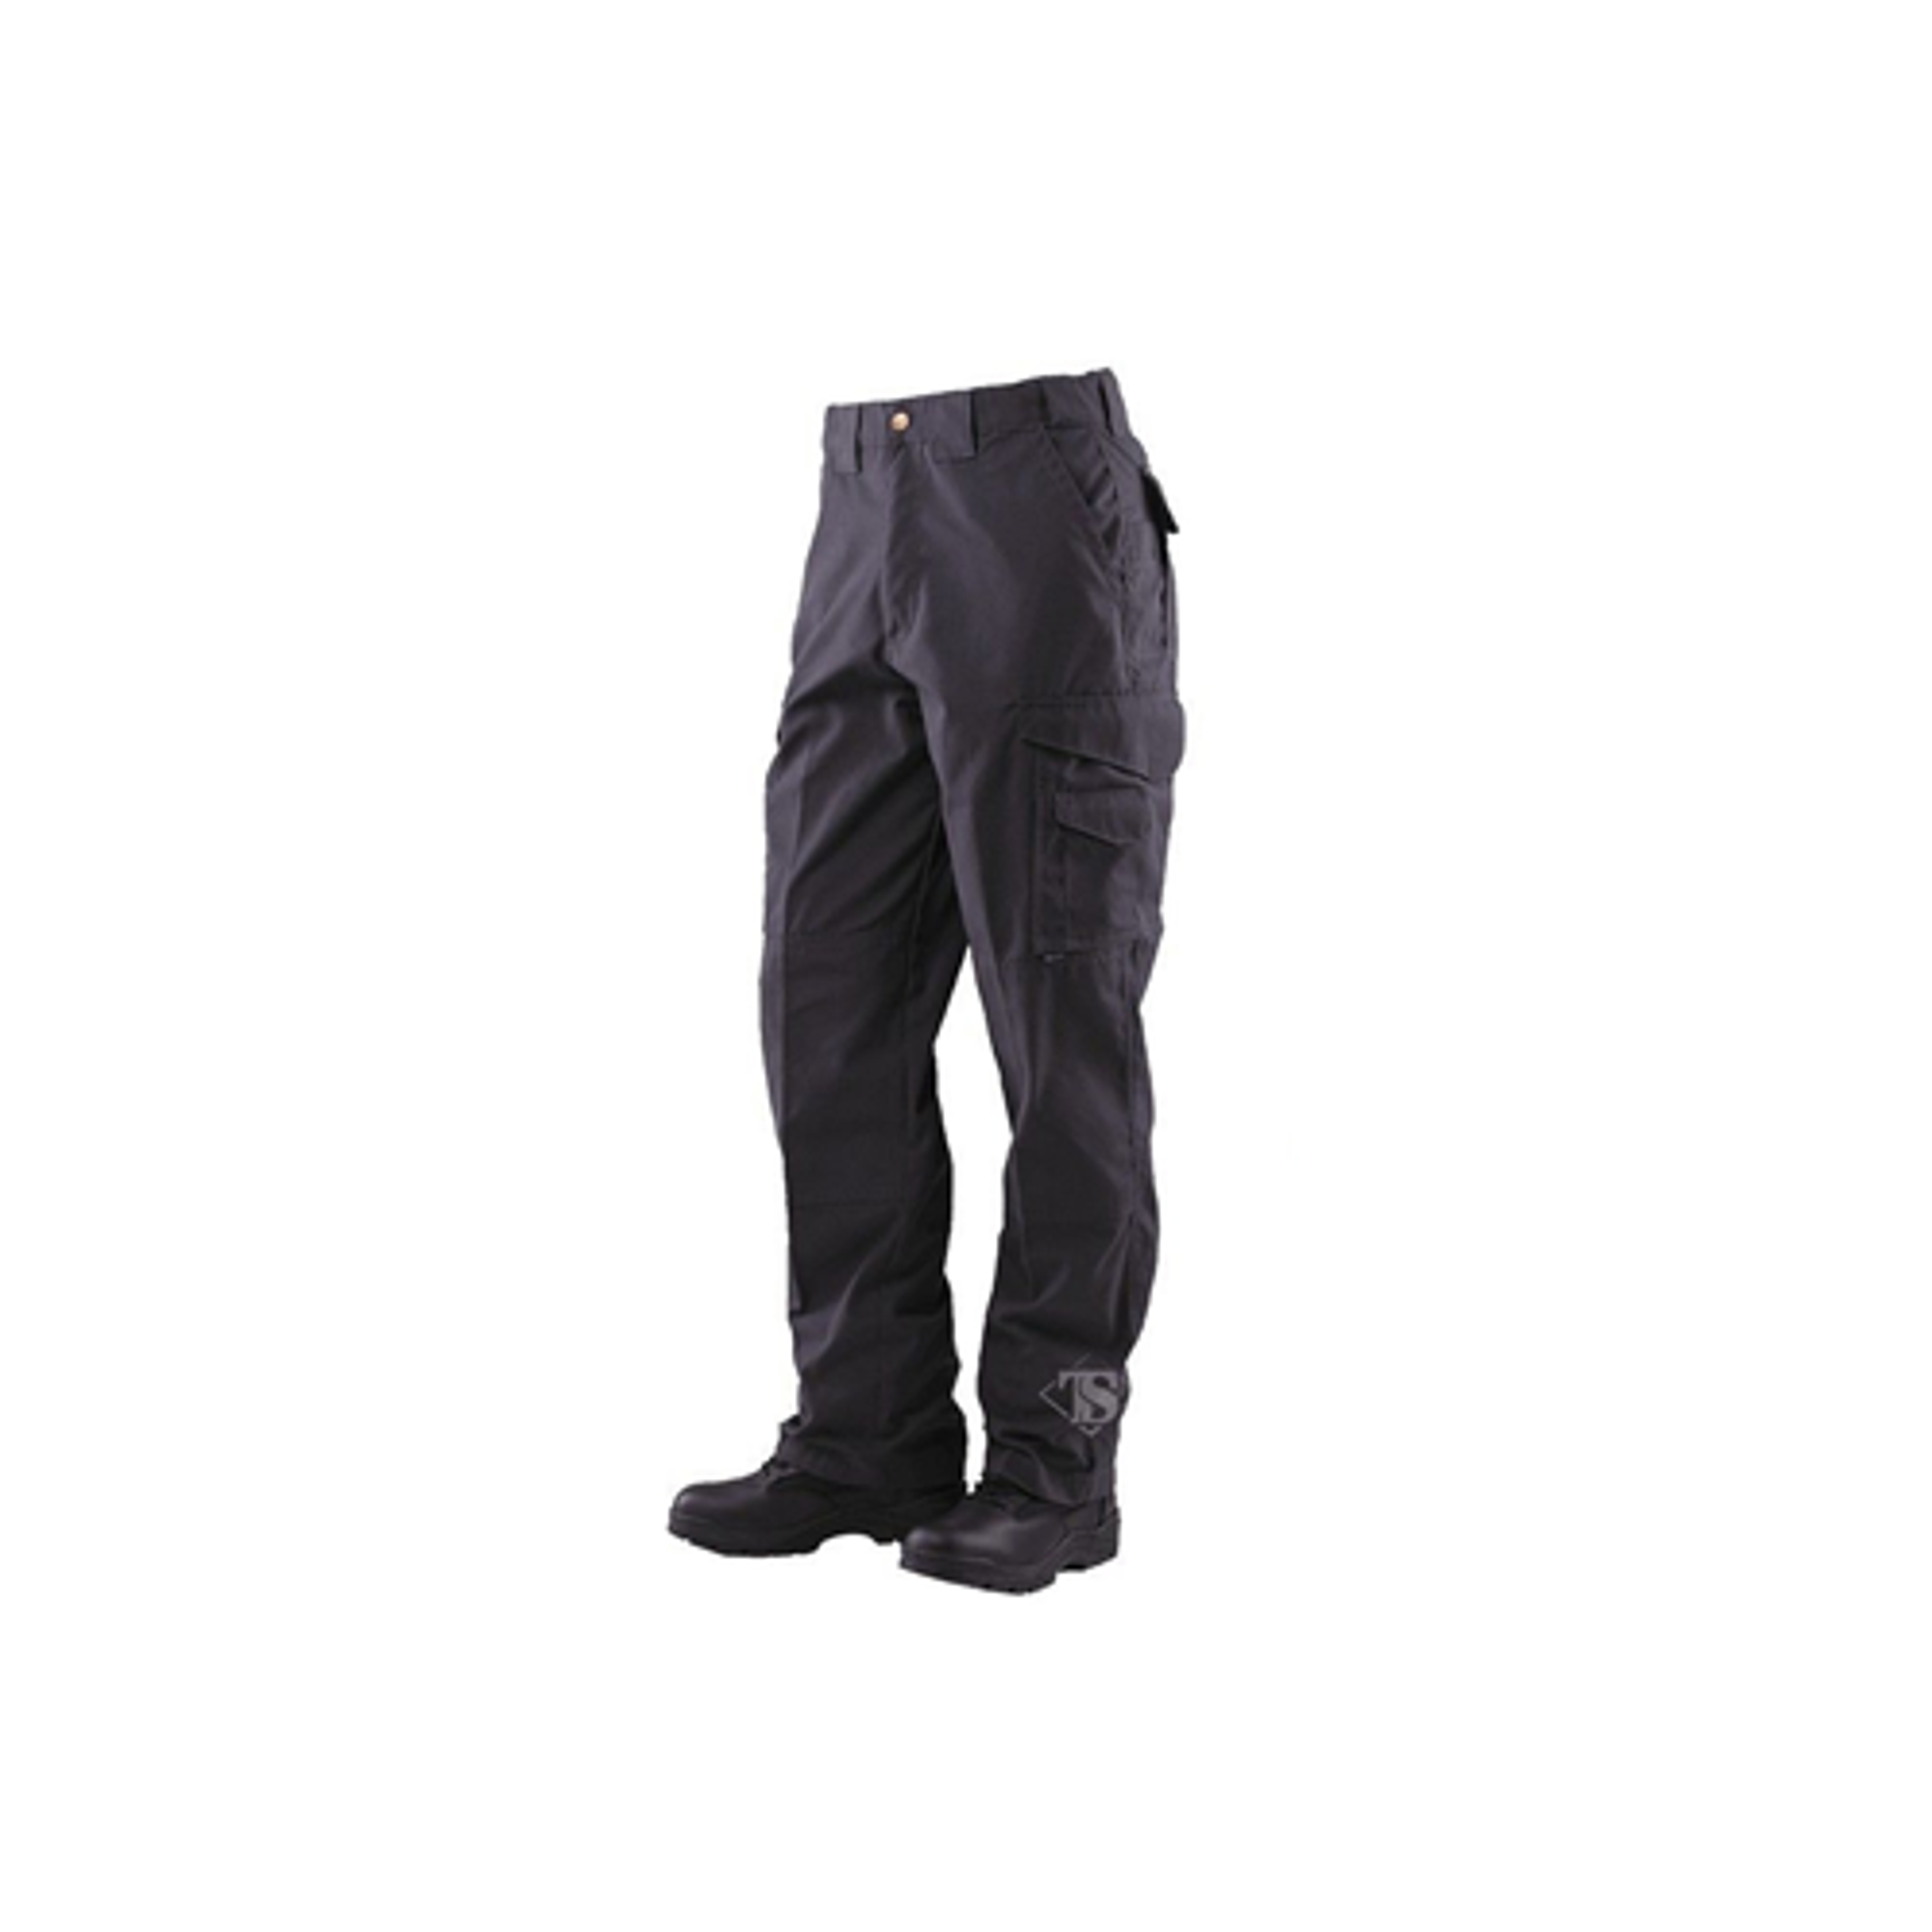 24-7 Original Tactical Pants - 6.5oz - Black - KRTSP-1062091